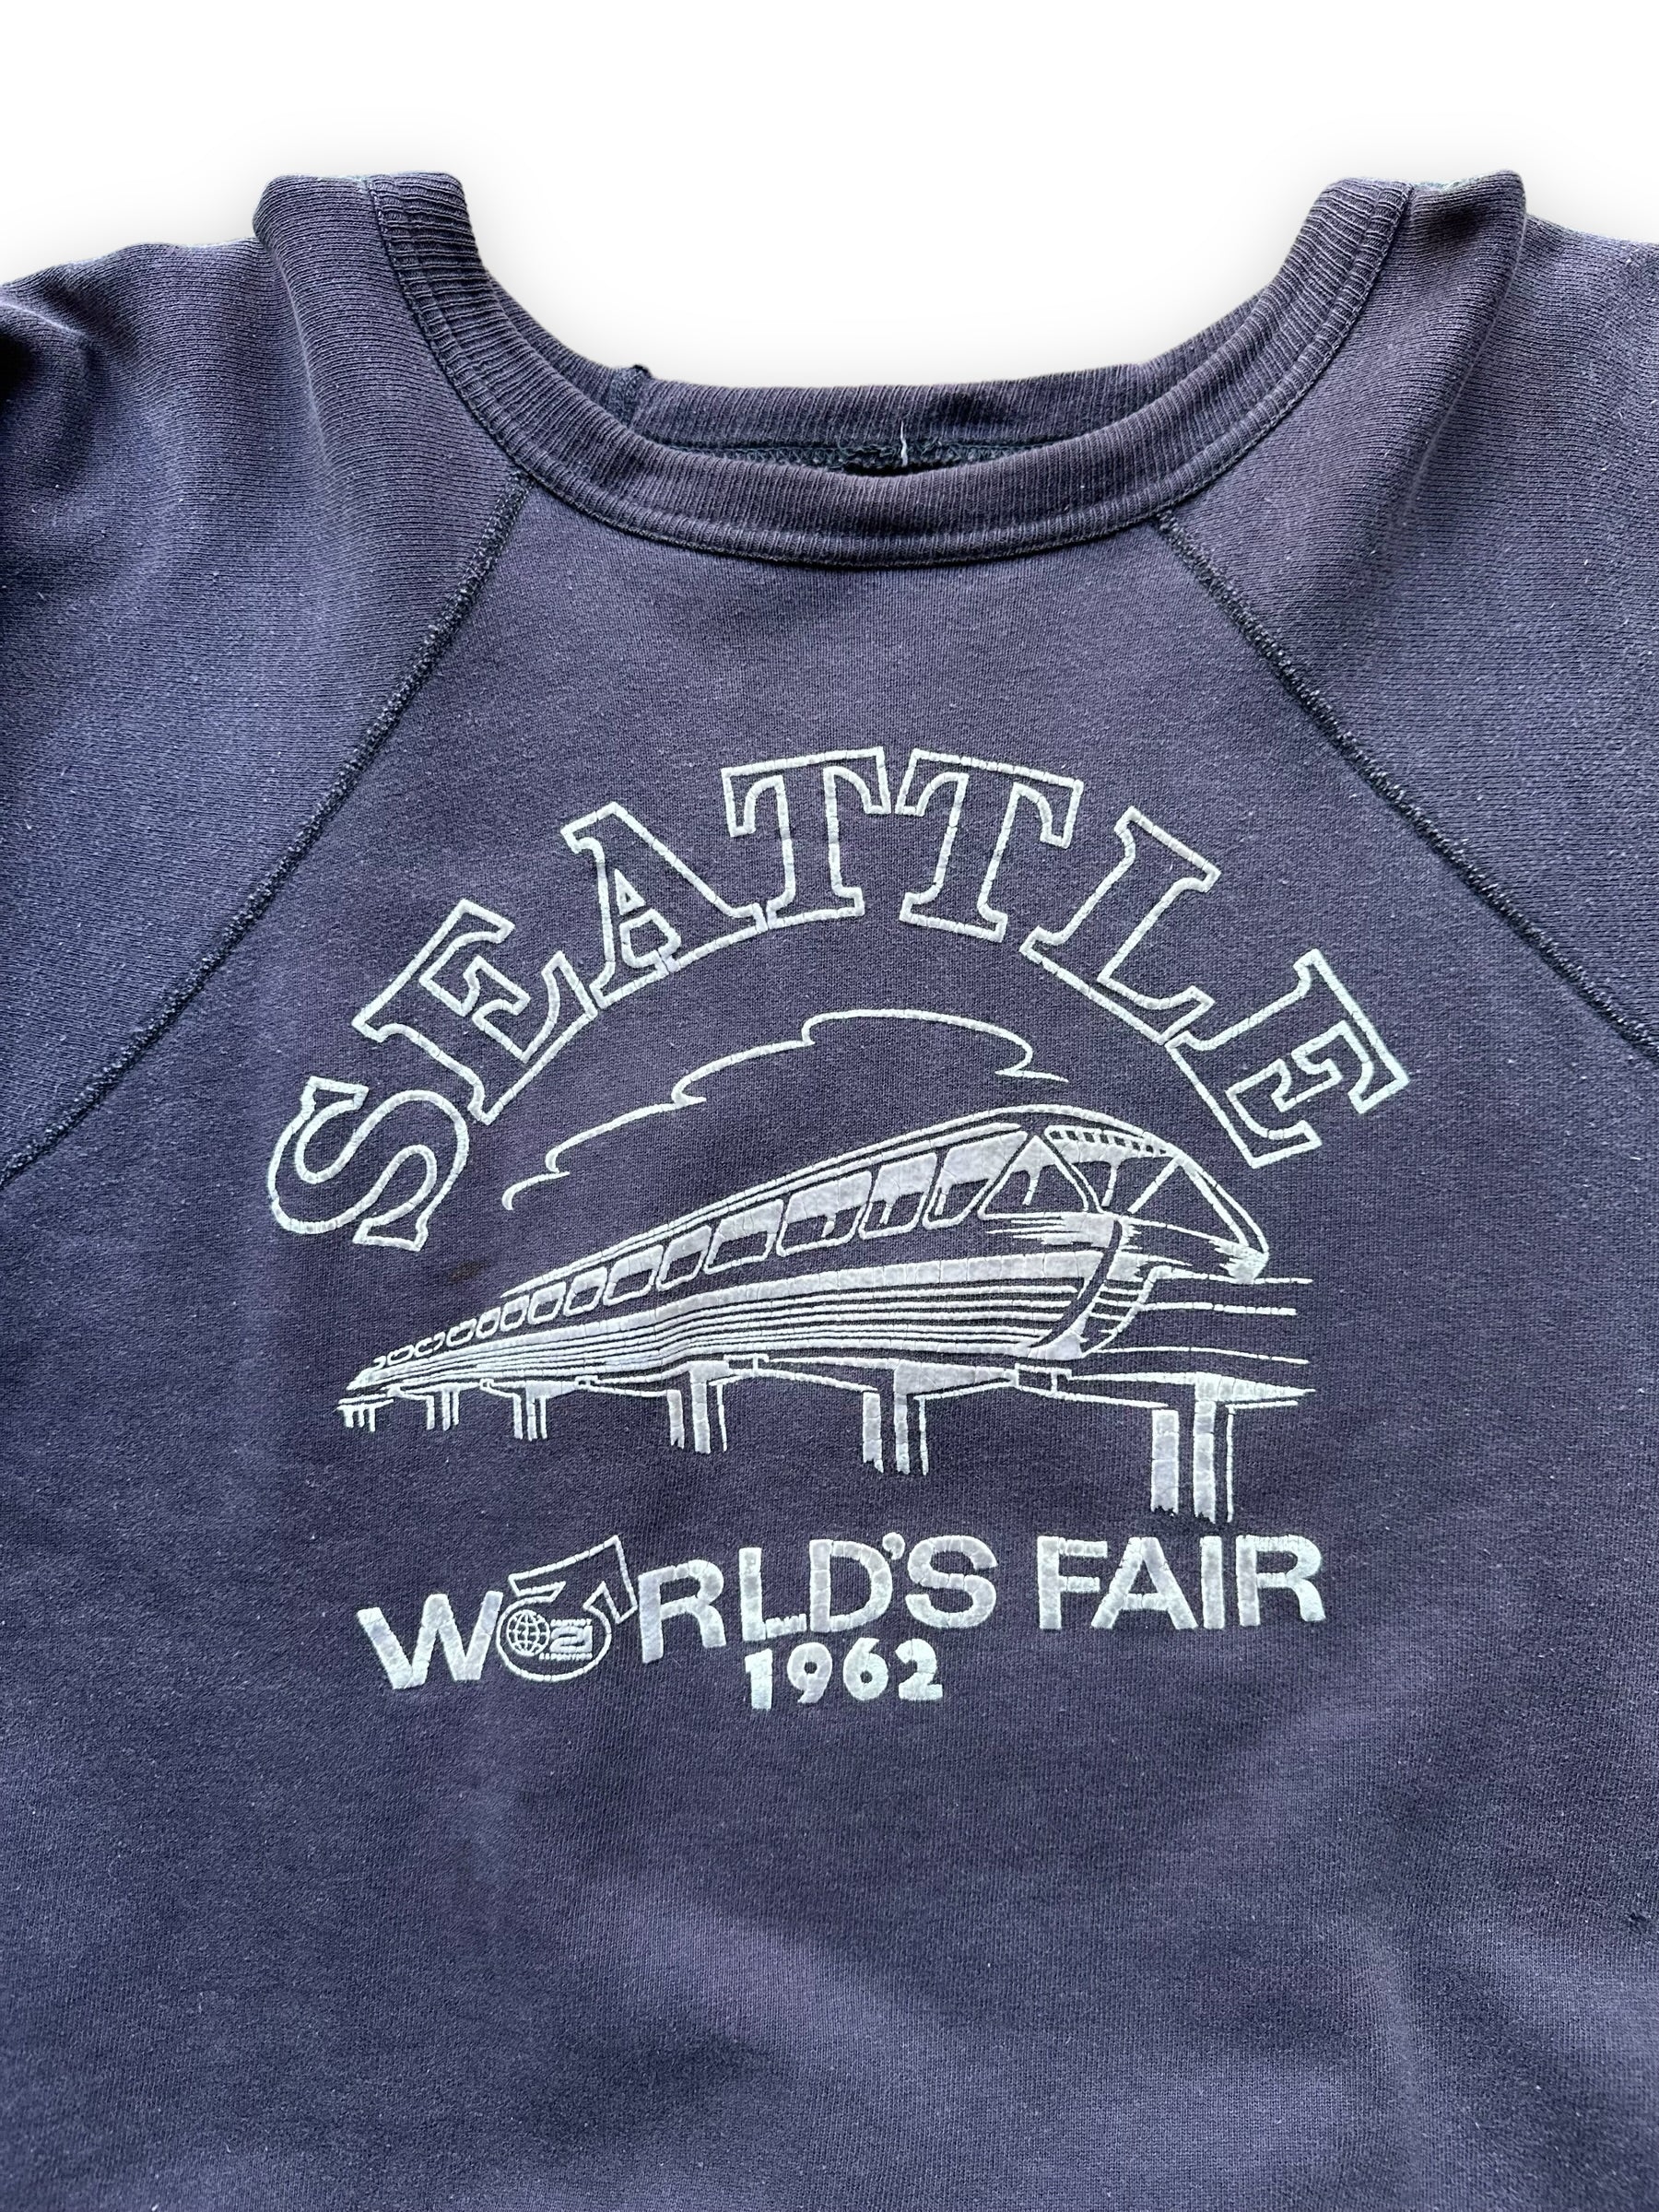 Flocked Graphic Close Up on Vintage Original Flocked Seattle World's Fair 1962 Navy Blue Crewneck |  Vintage Sweatshirts Seattle |  Barn Owl Vintage